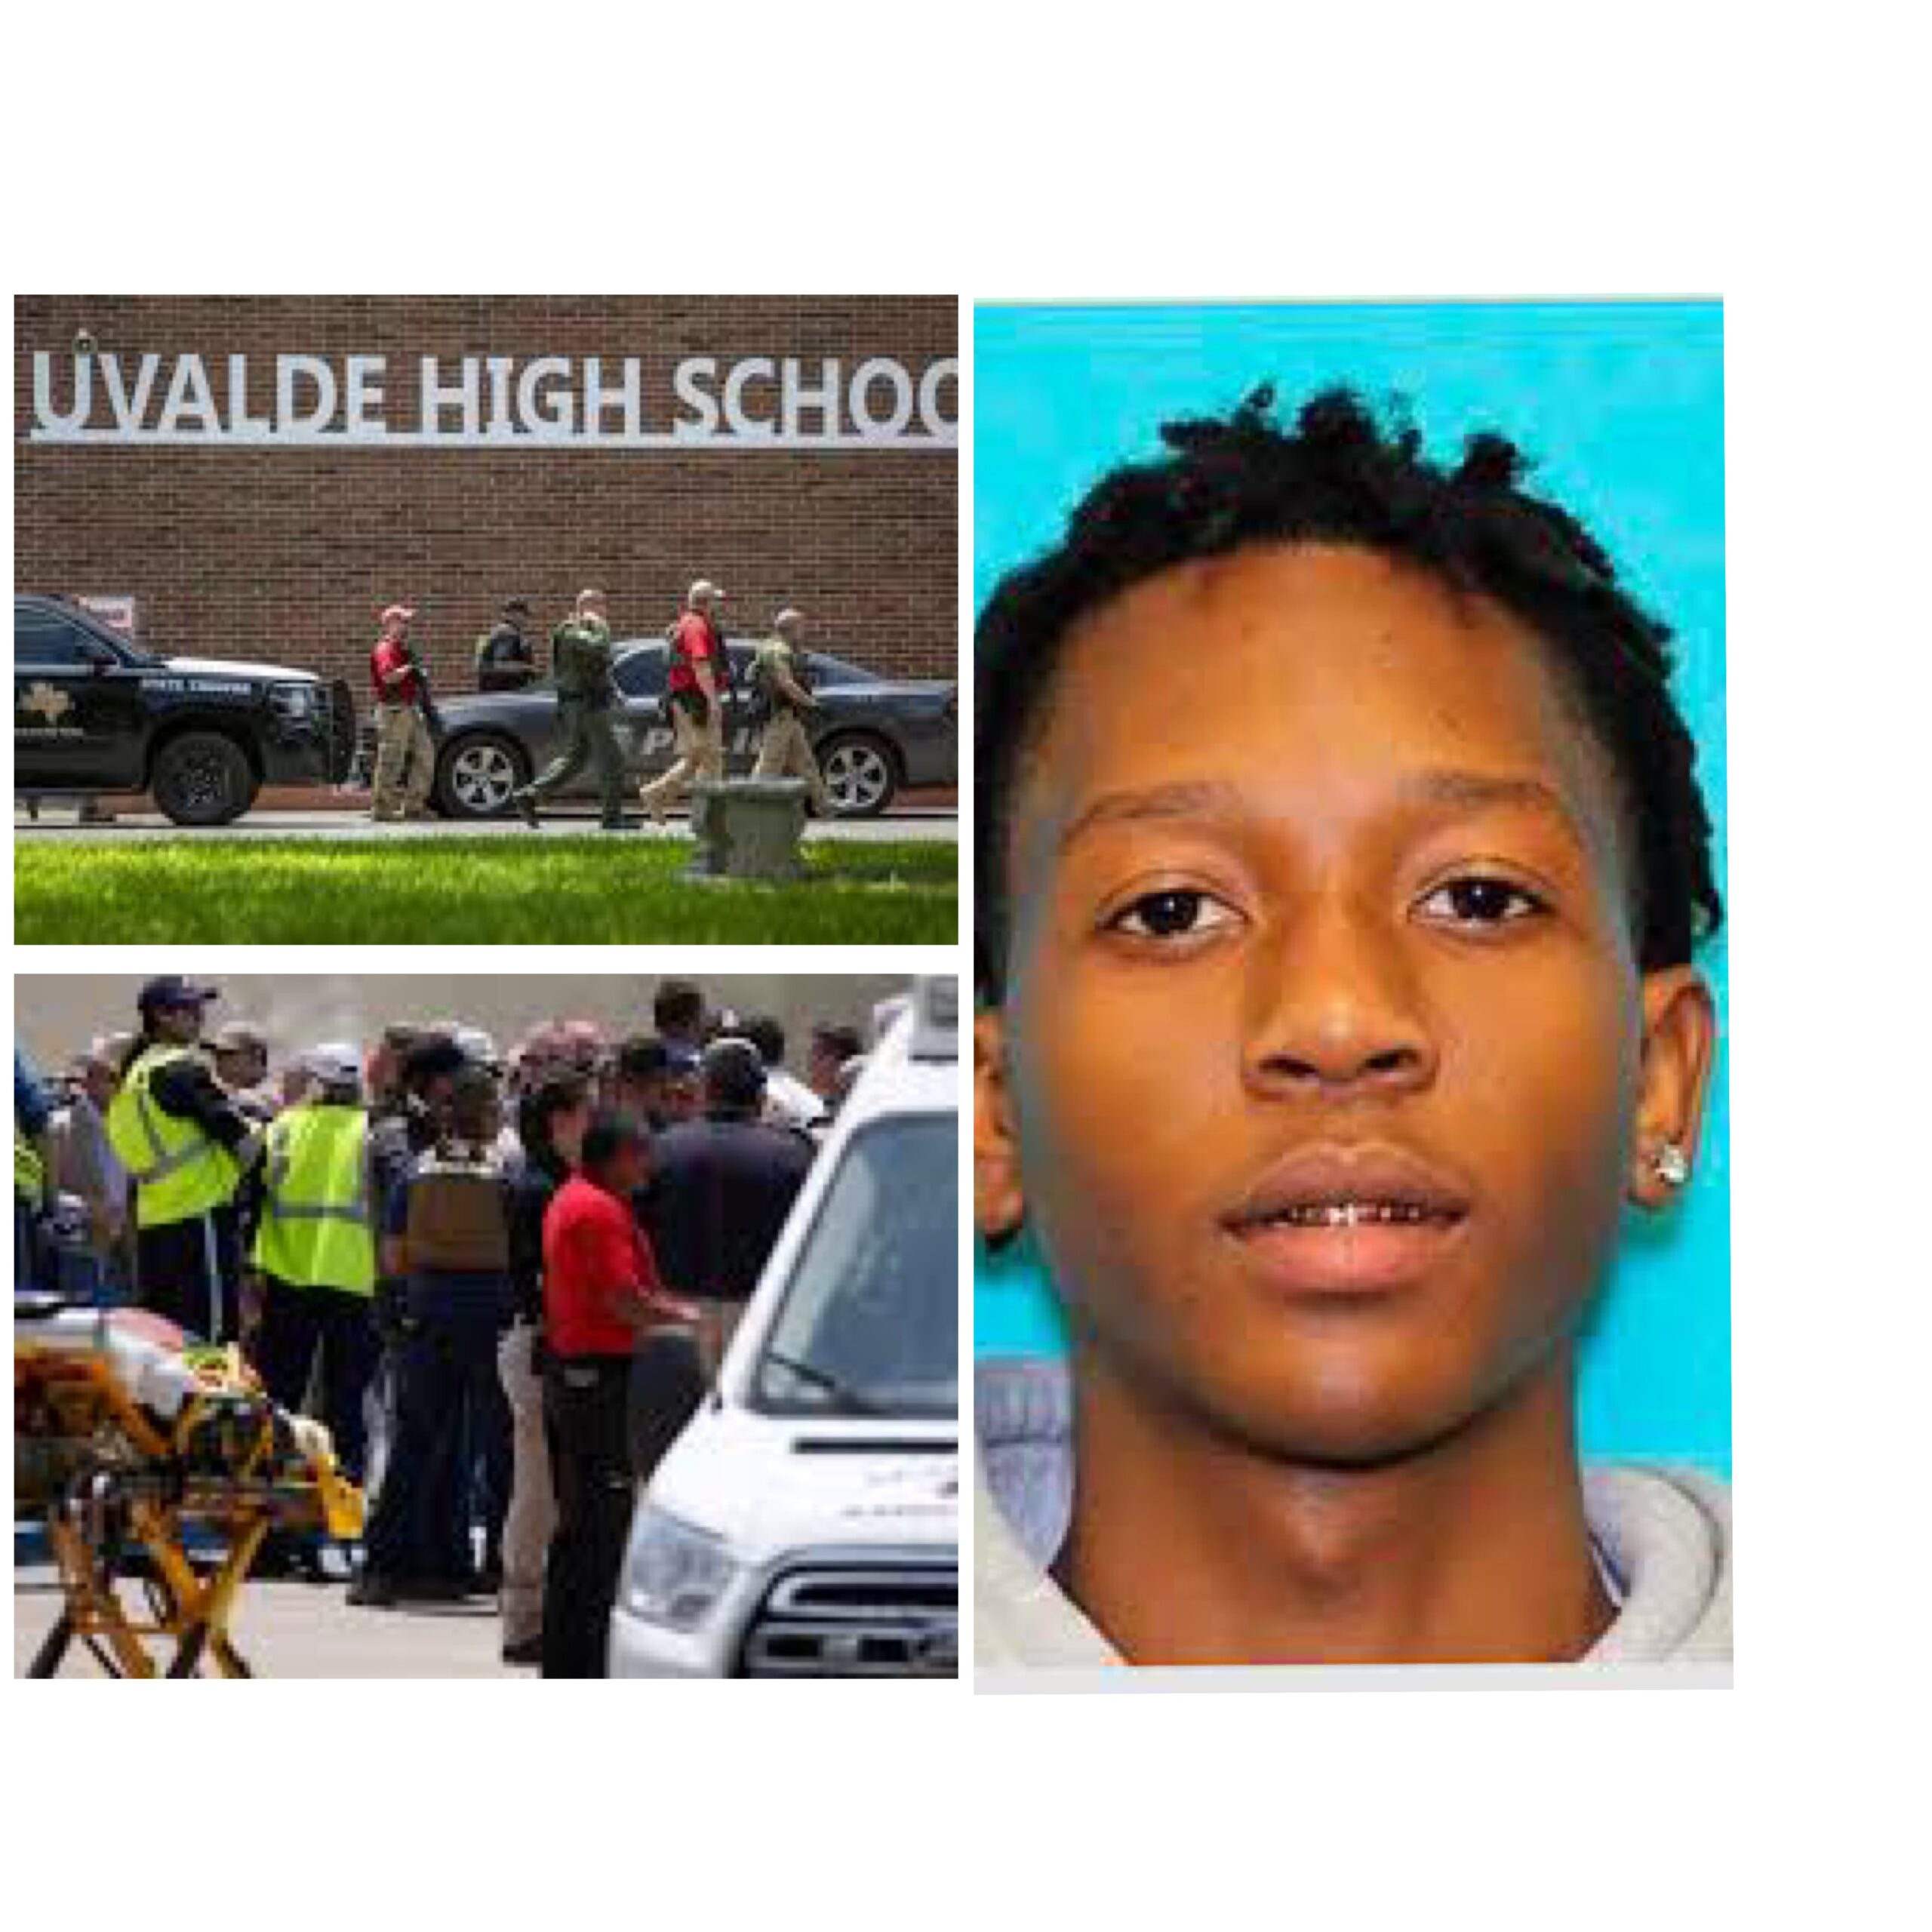 Texas School Shooting-18 Children And 1 teacher dead